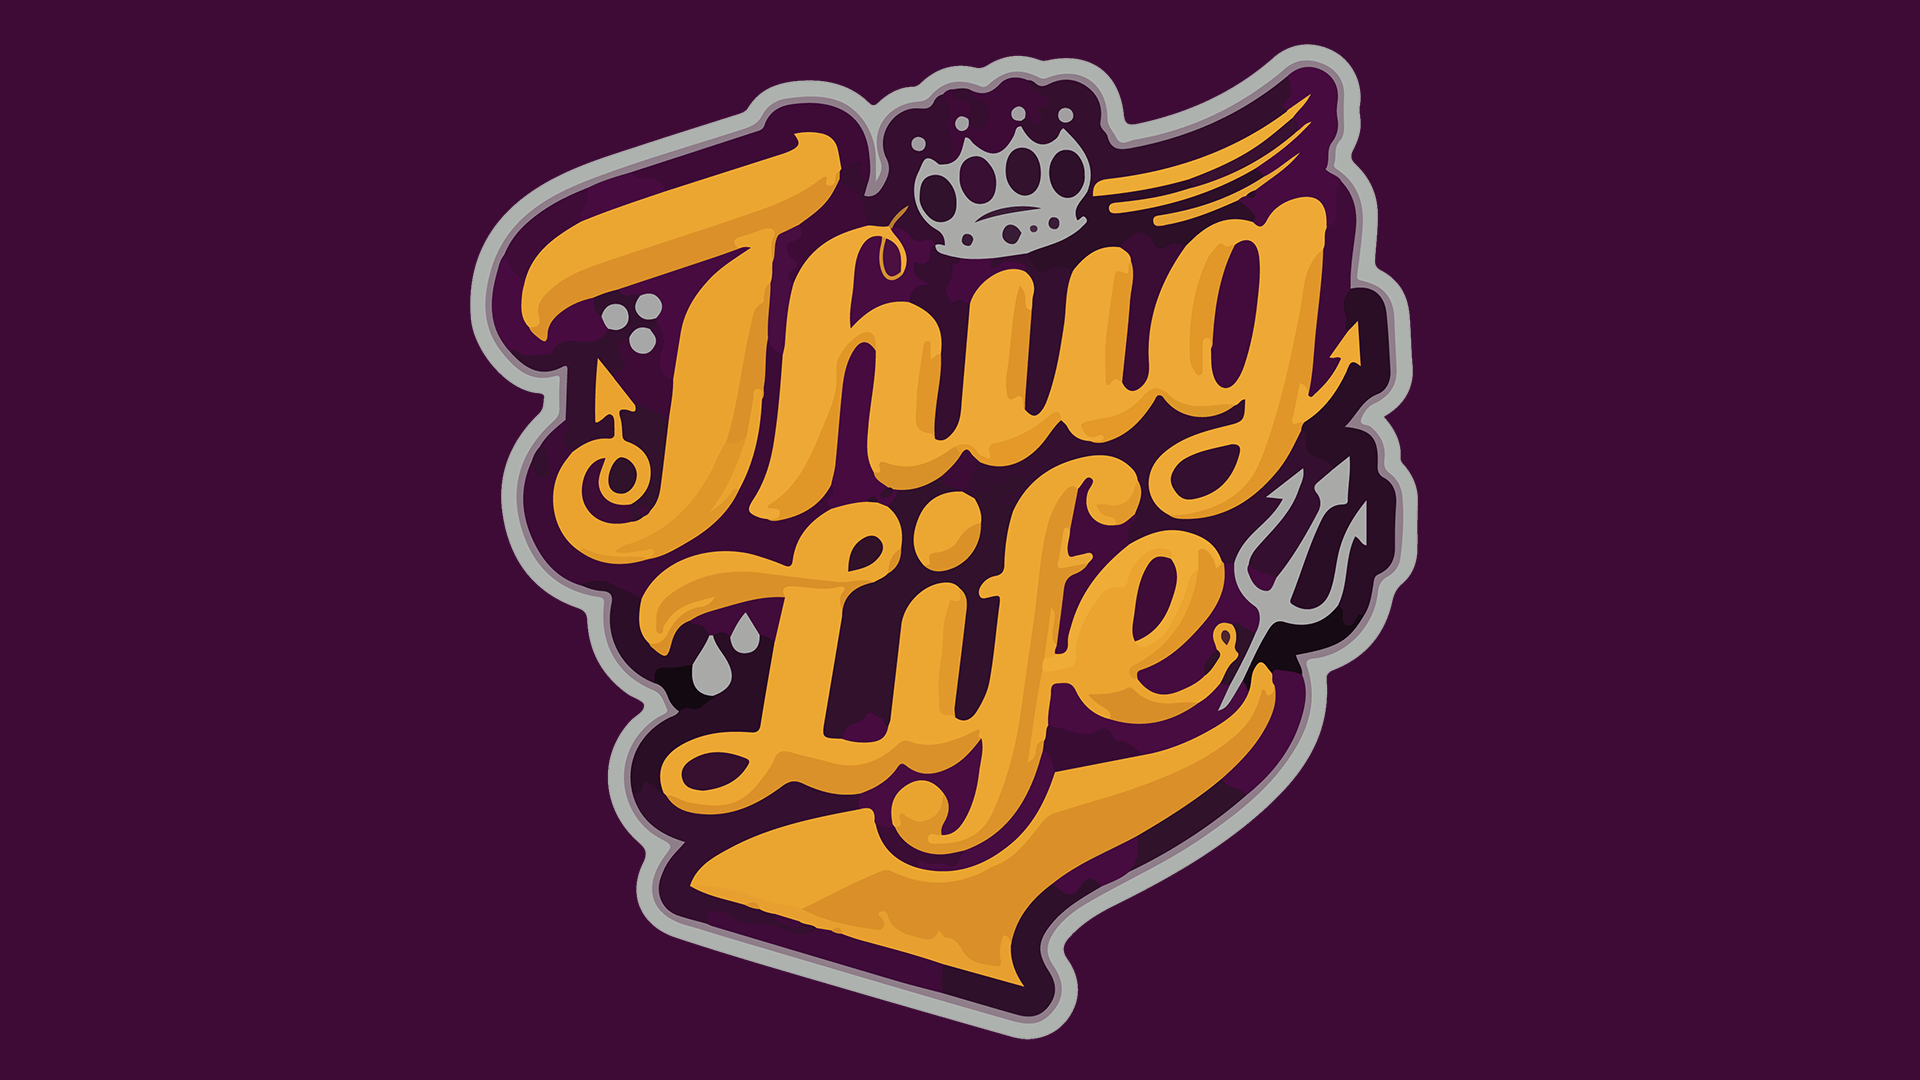 Thug Life. CS:GO Wallpaper and Background